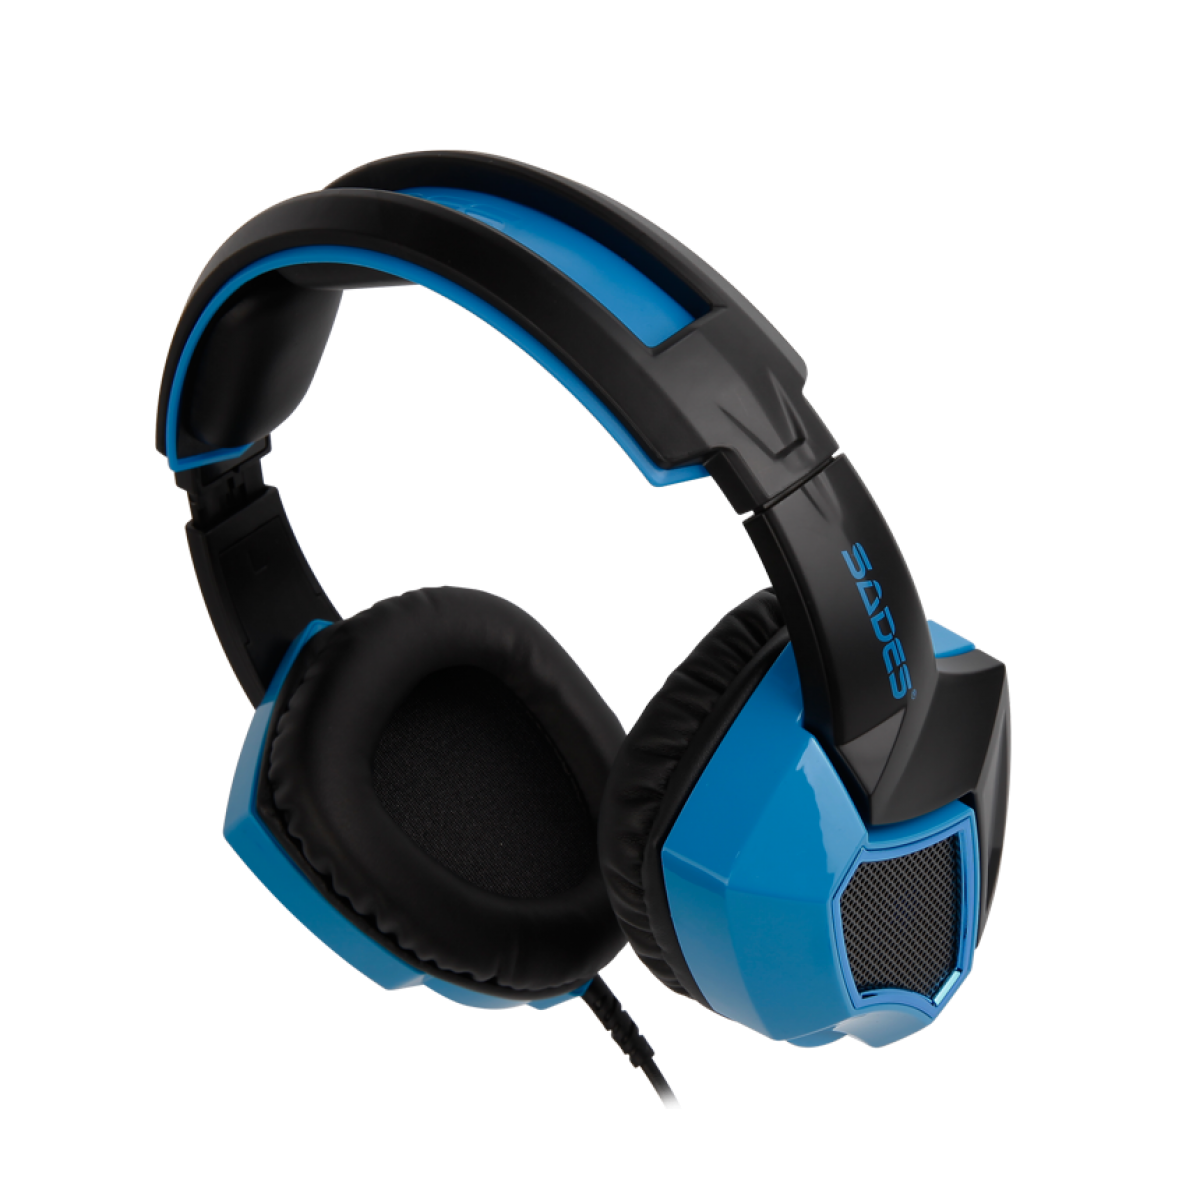 Headset Gamer Sades Sa-968 Luna, 7.1 Surround, Black/Blue, SA-968